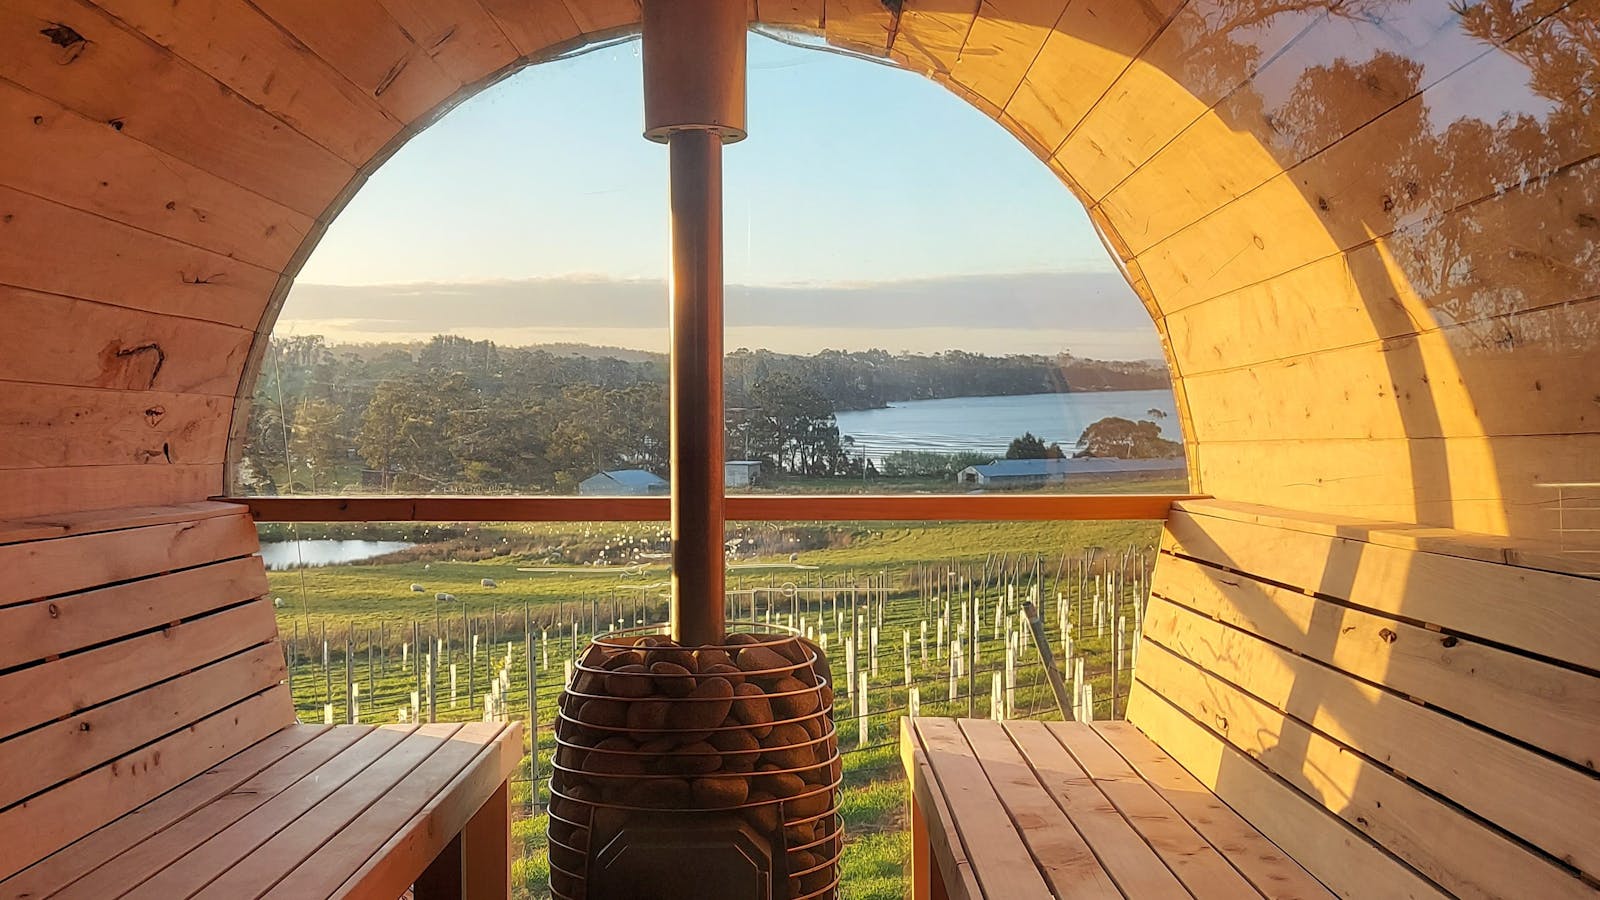 The vineyard views